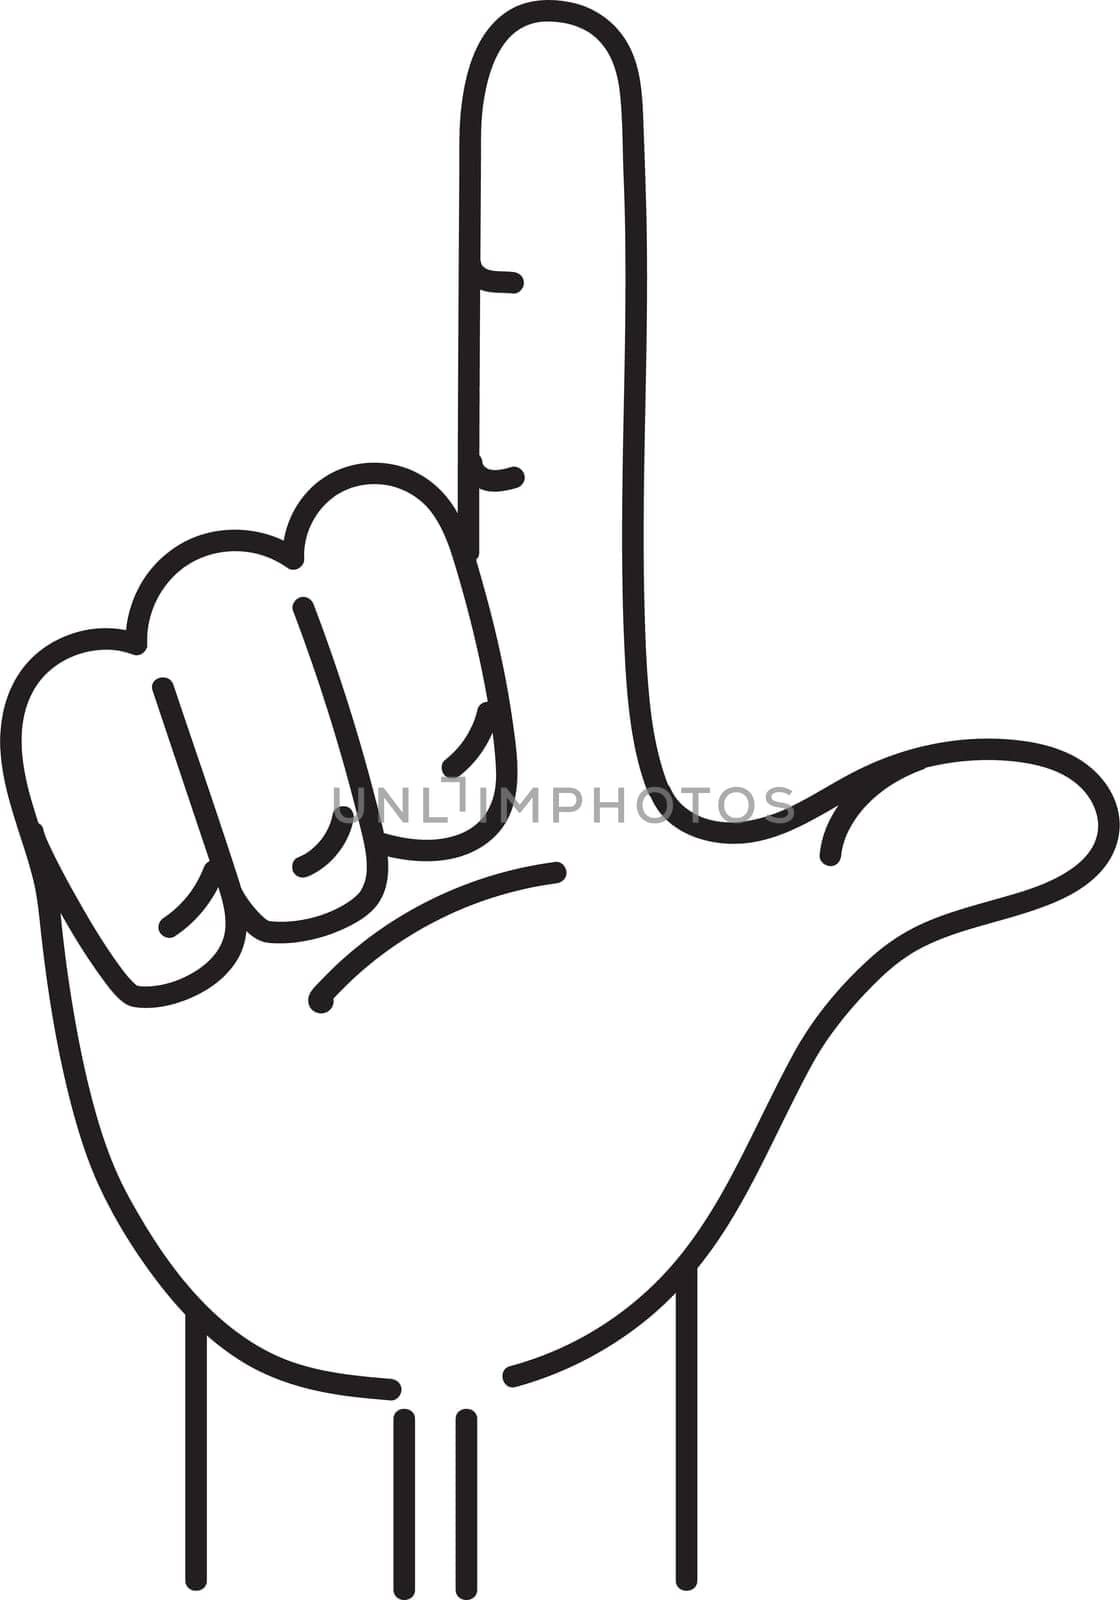 Hand Making the Loser Hand Gesture Mono Line Art by patrimonio